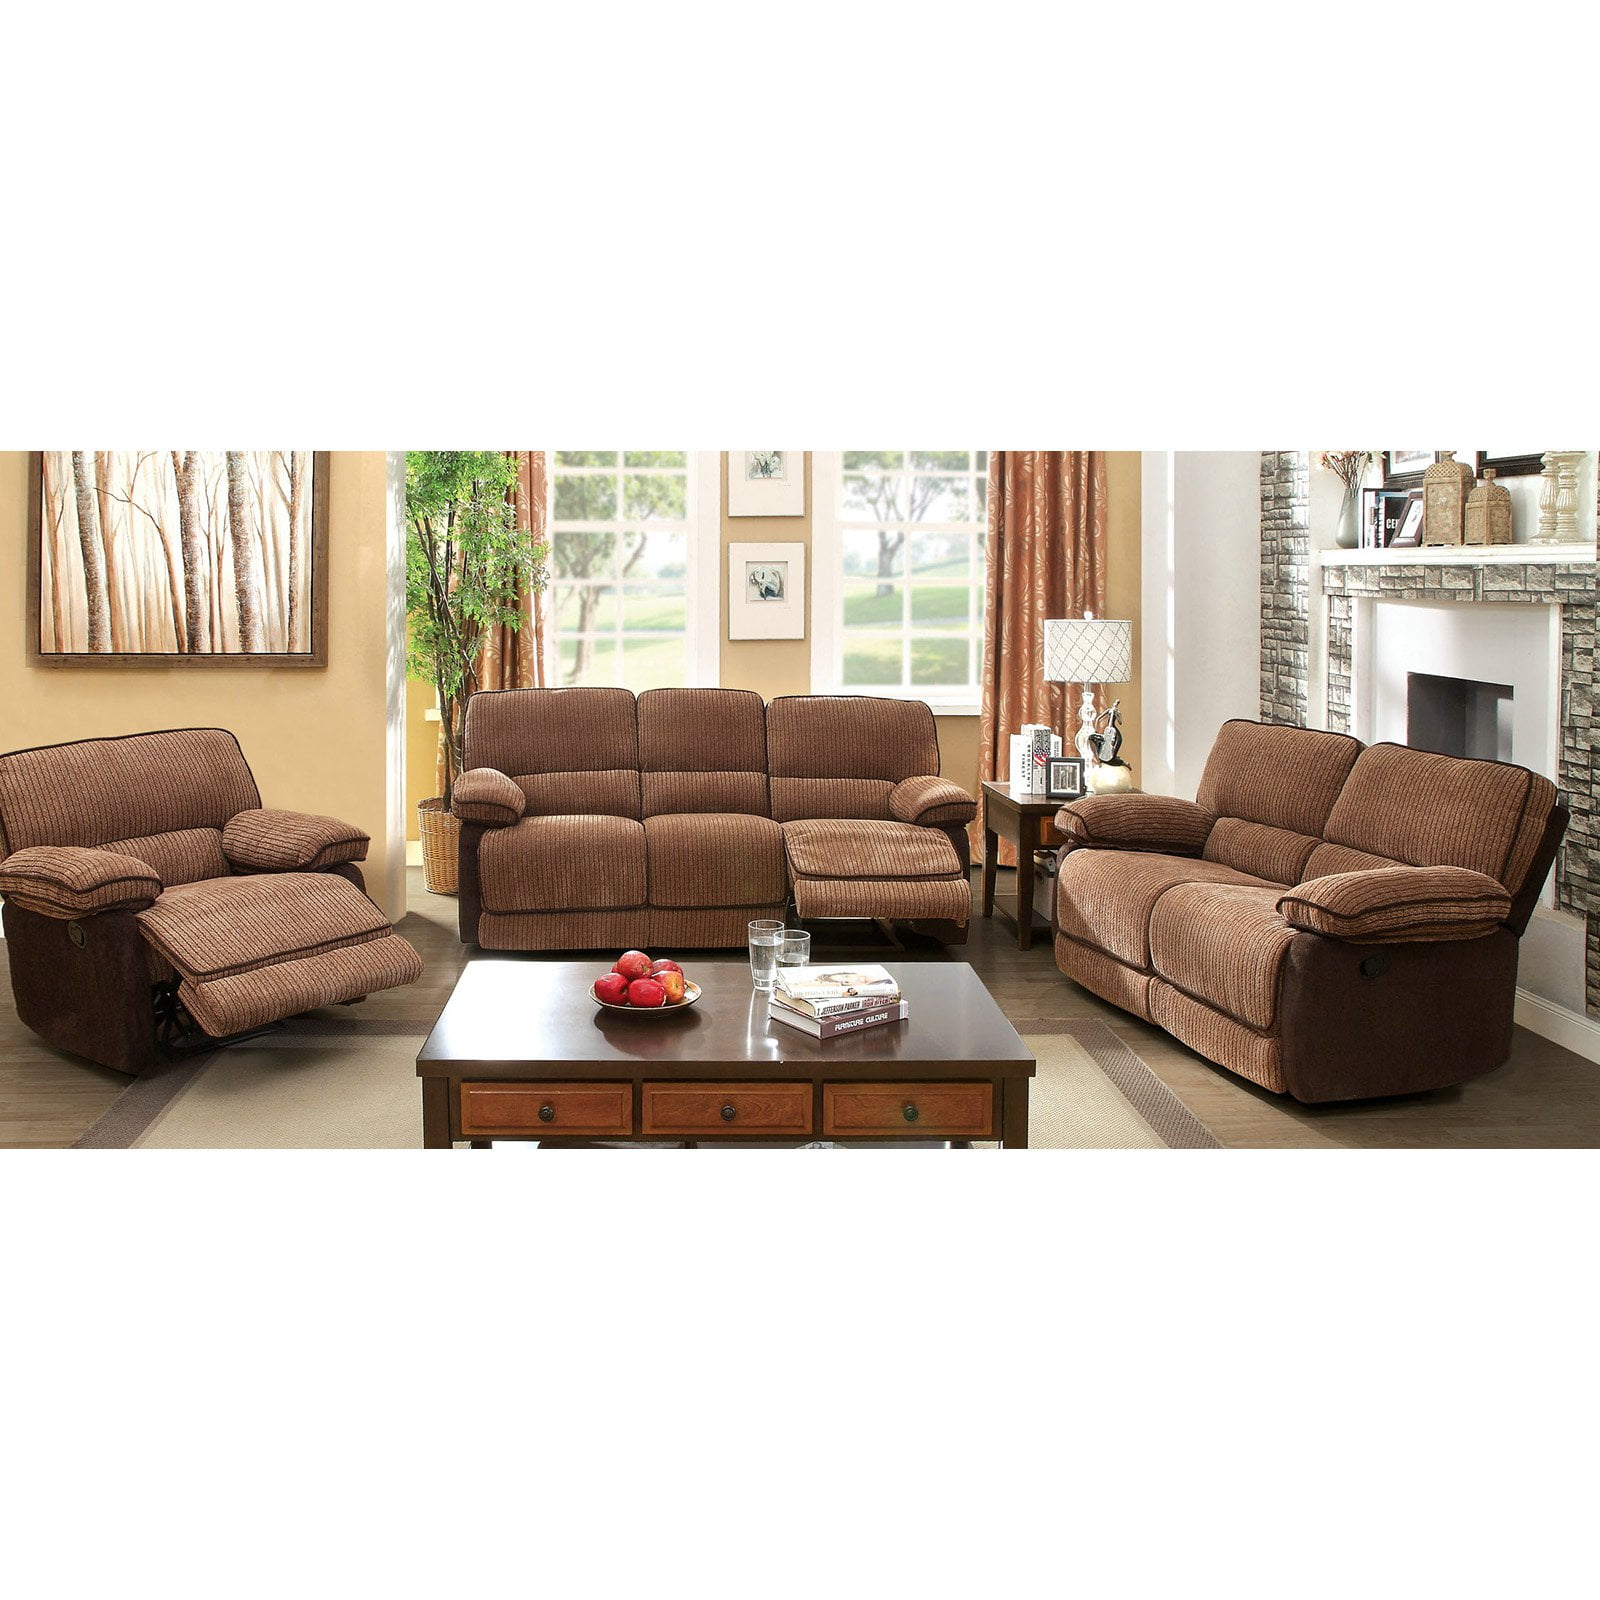 Chenille Fabric Recliner Sofa Set, Brown Fabric Recliner Sofa Set